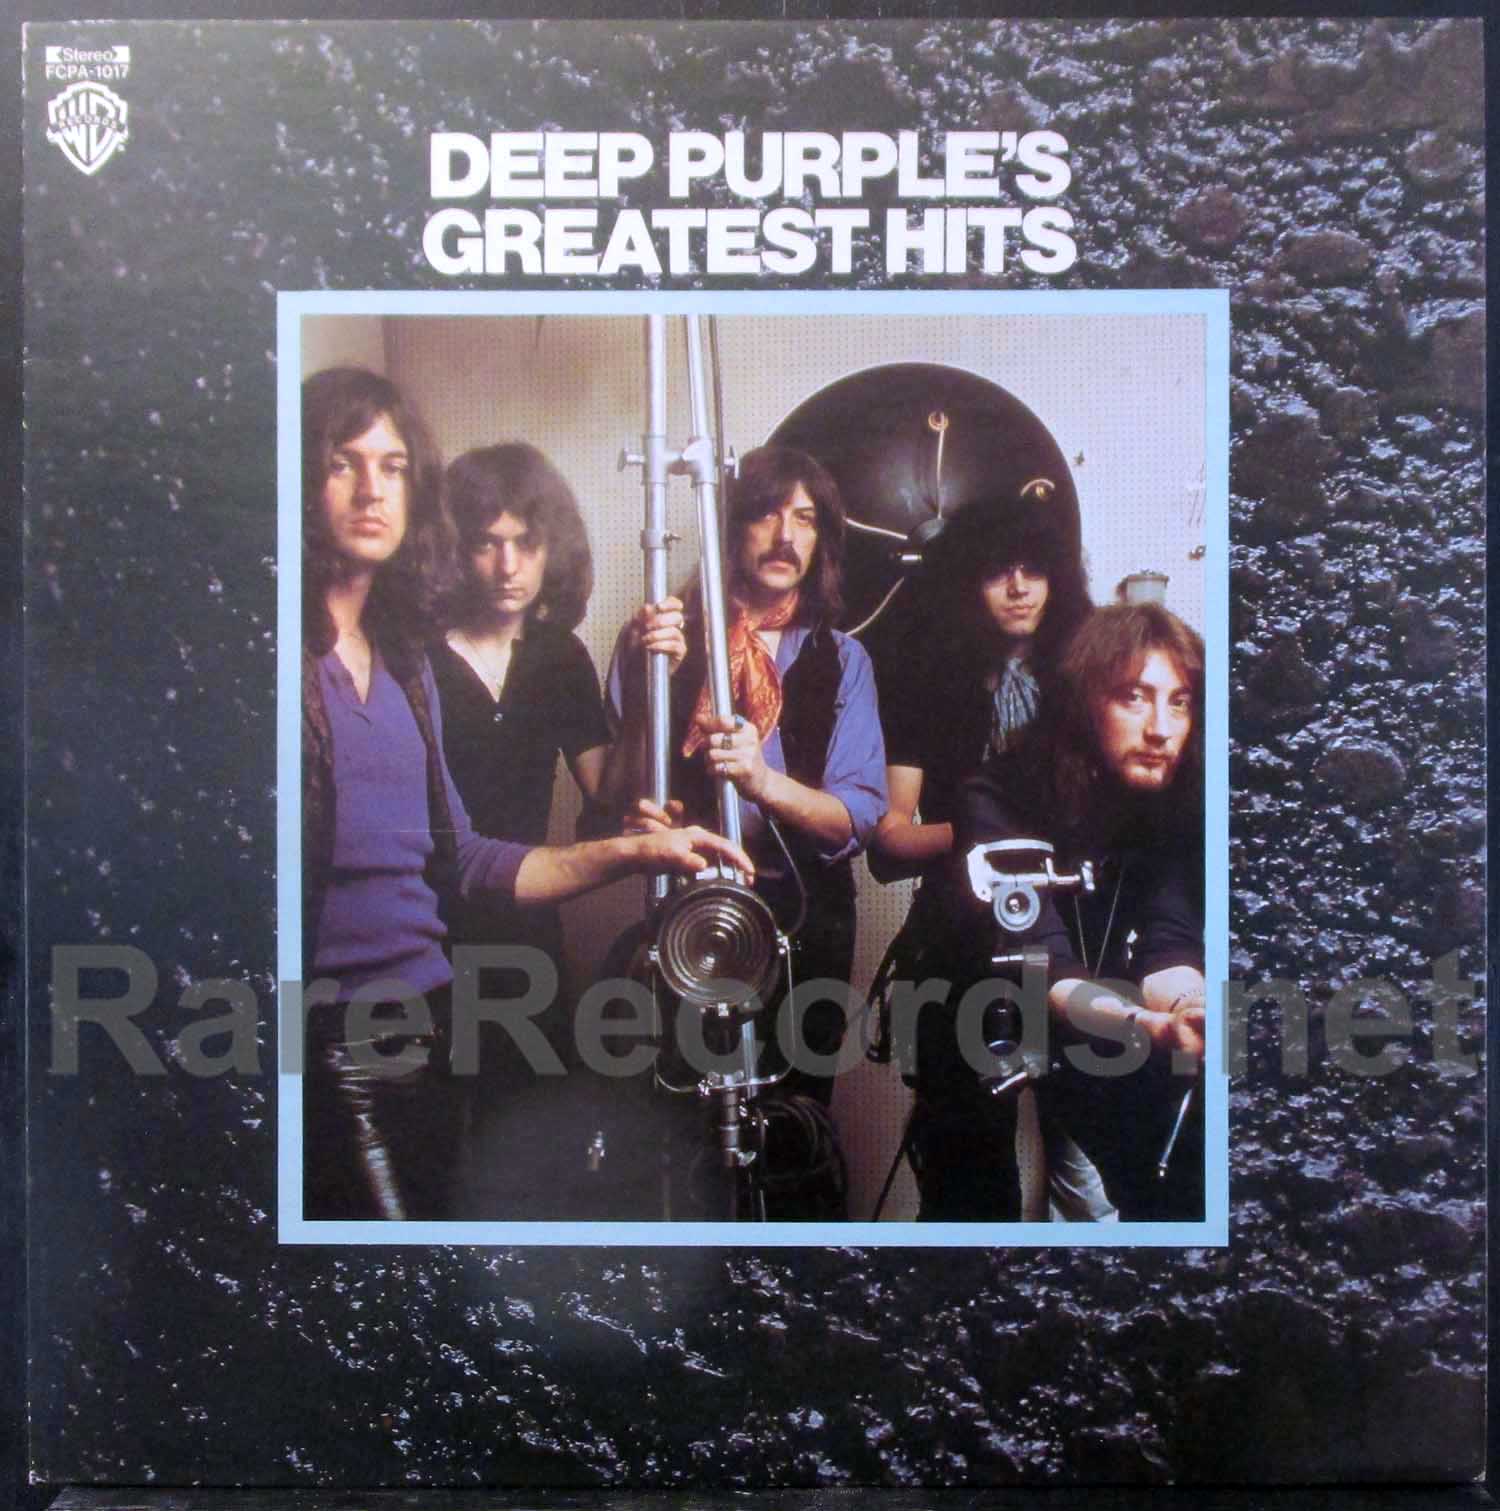 Deep Purple - Deep Purple's Greatest Hits Japan record club LP